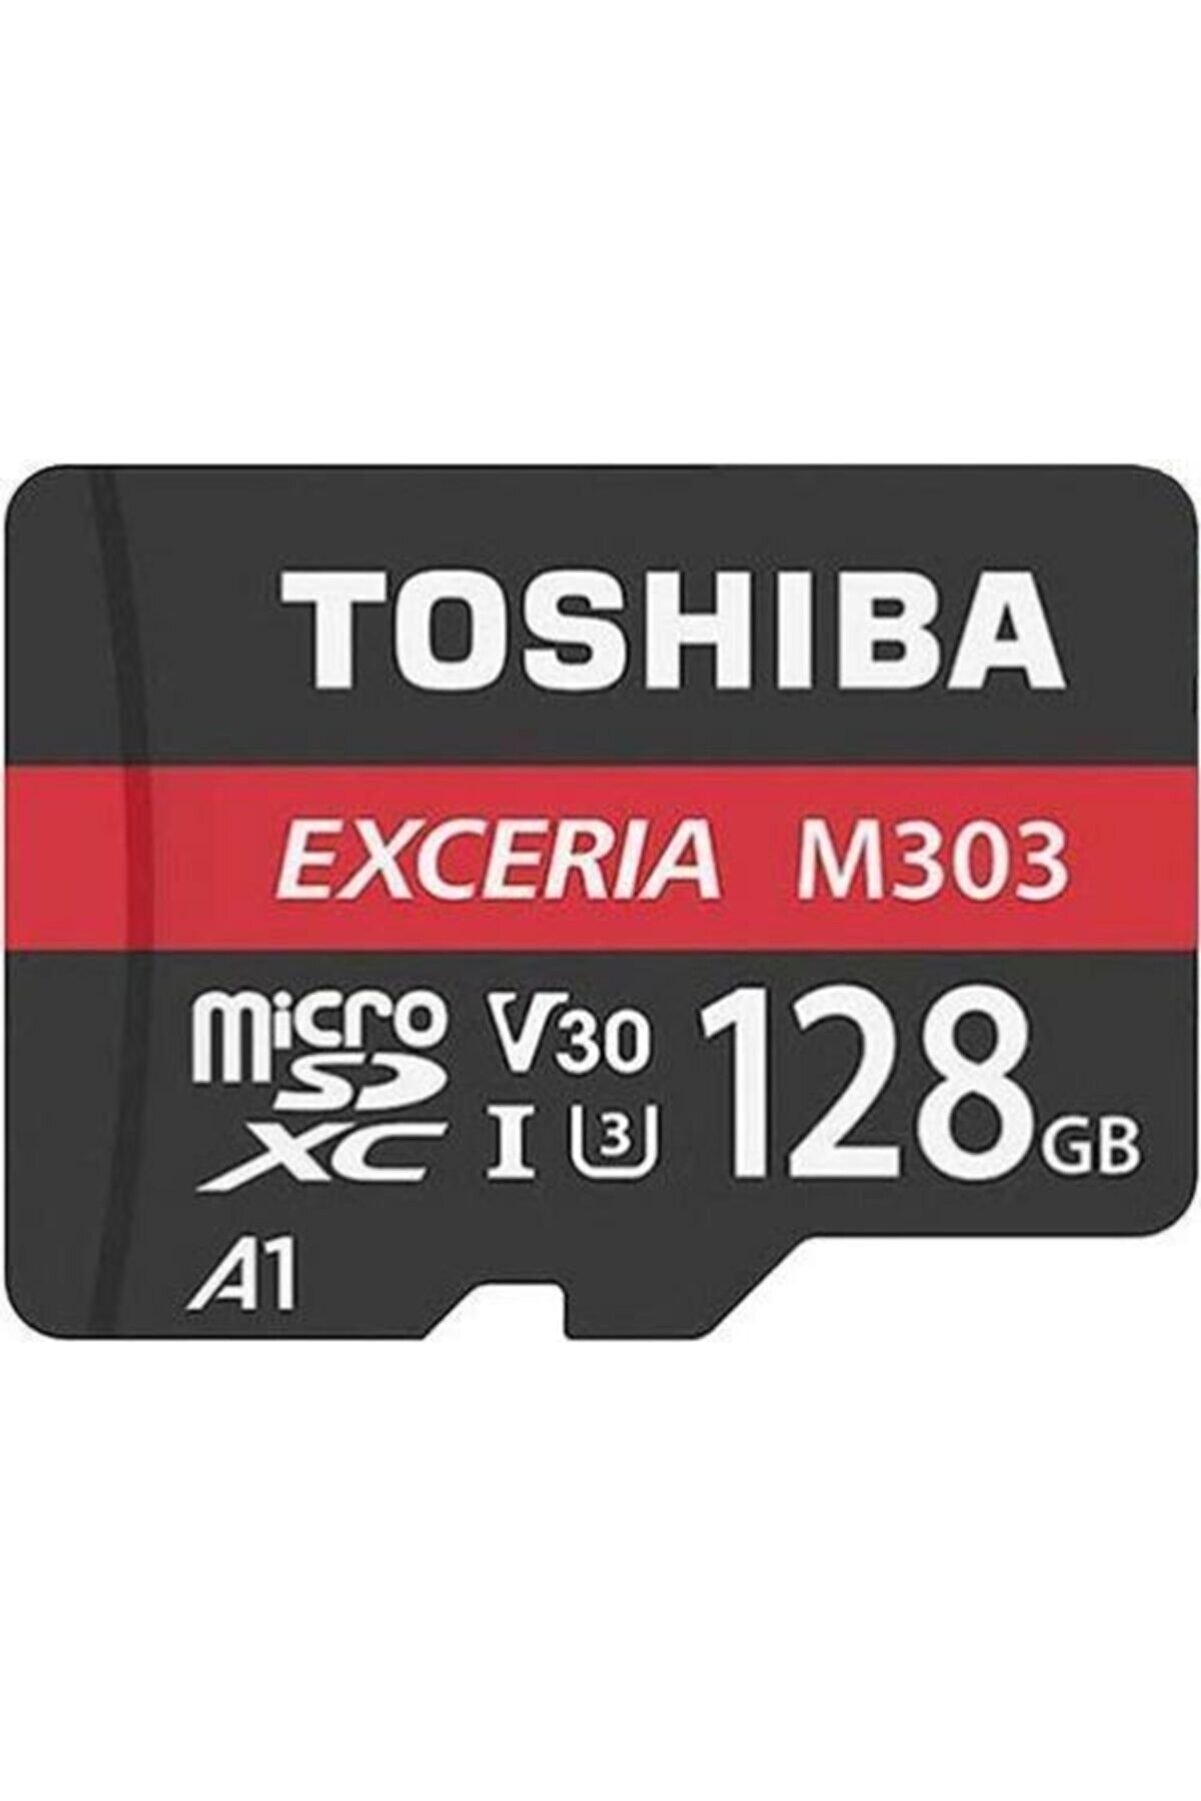 Toshiba 128gb Exceria Micro Sdxc Uhs1 U3 98/65mb Hafıza Kartı Thn-m303r1280e2